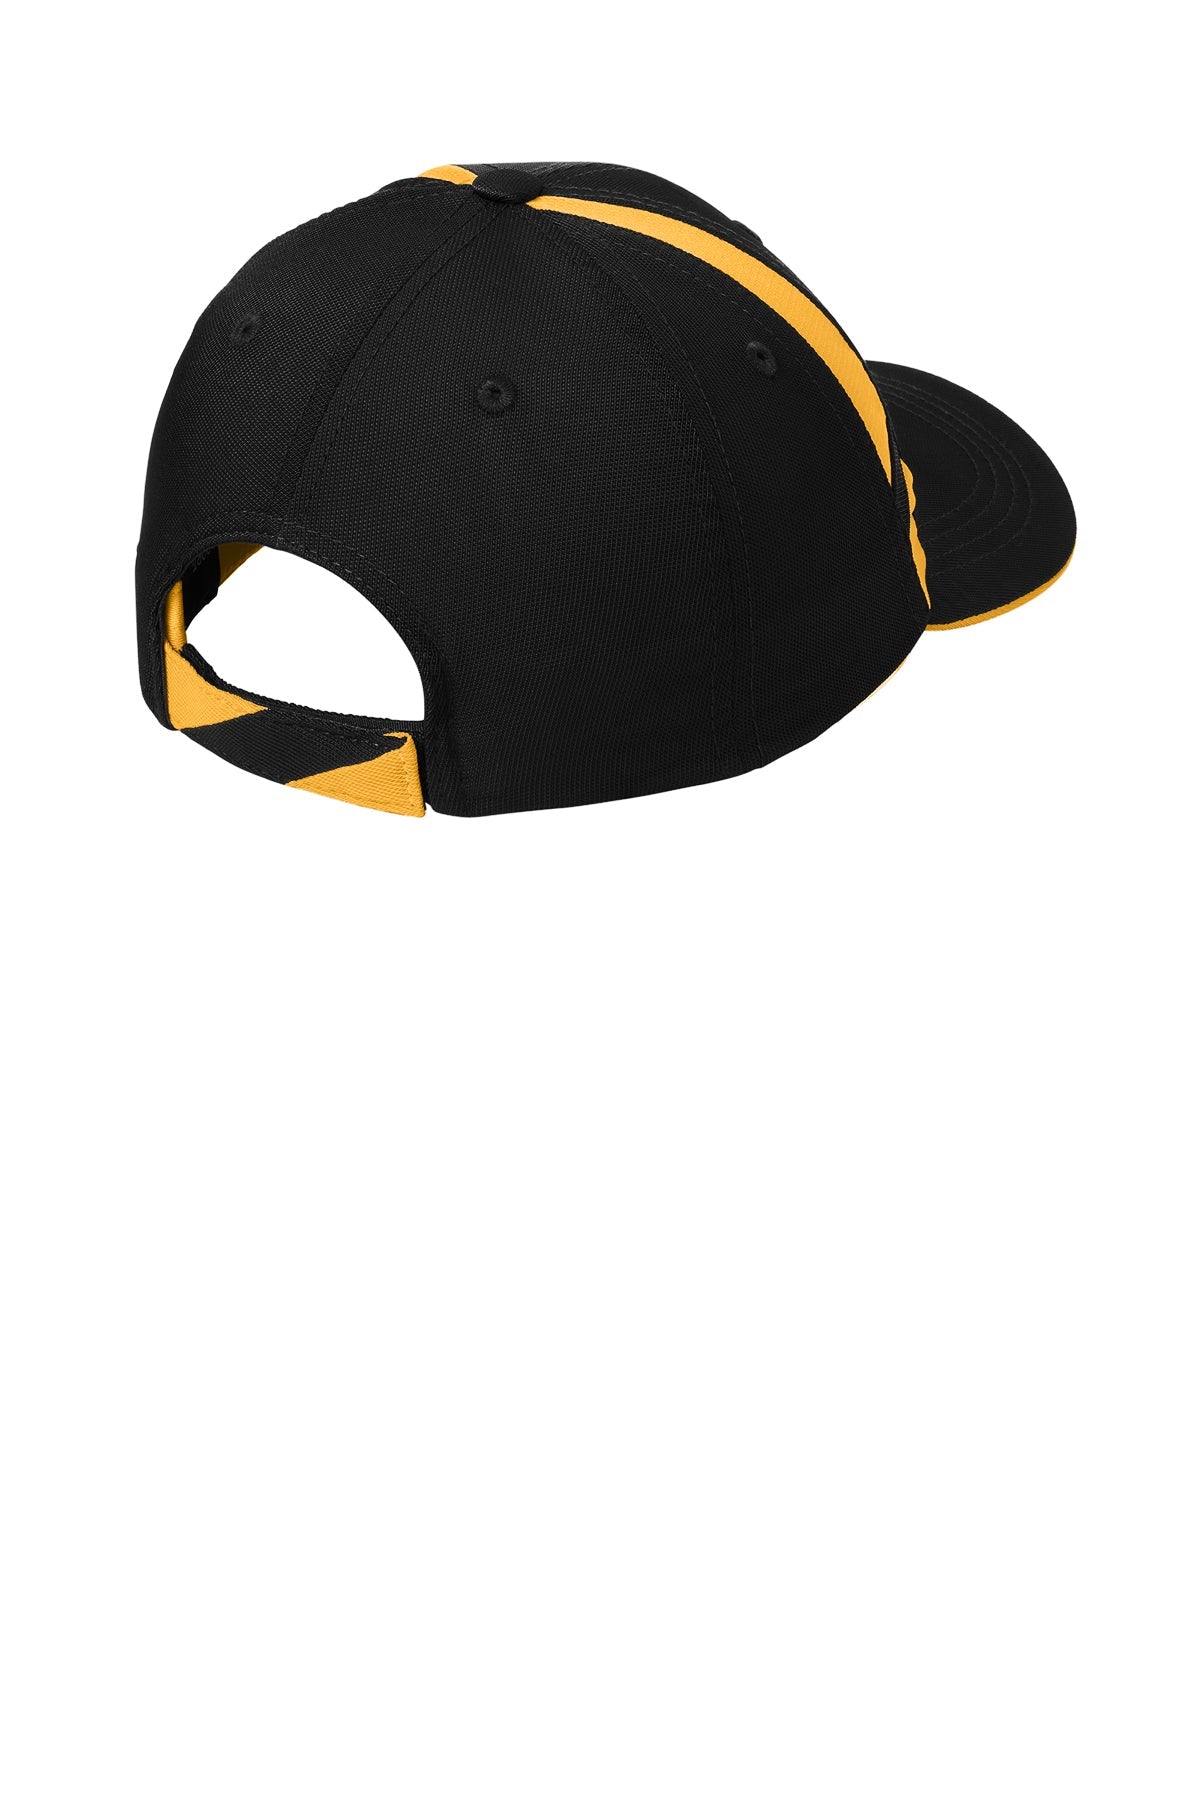 Sport-Tek Dry Zone Customized Mesh Inset Caps, Black/Gold